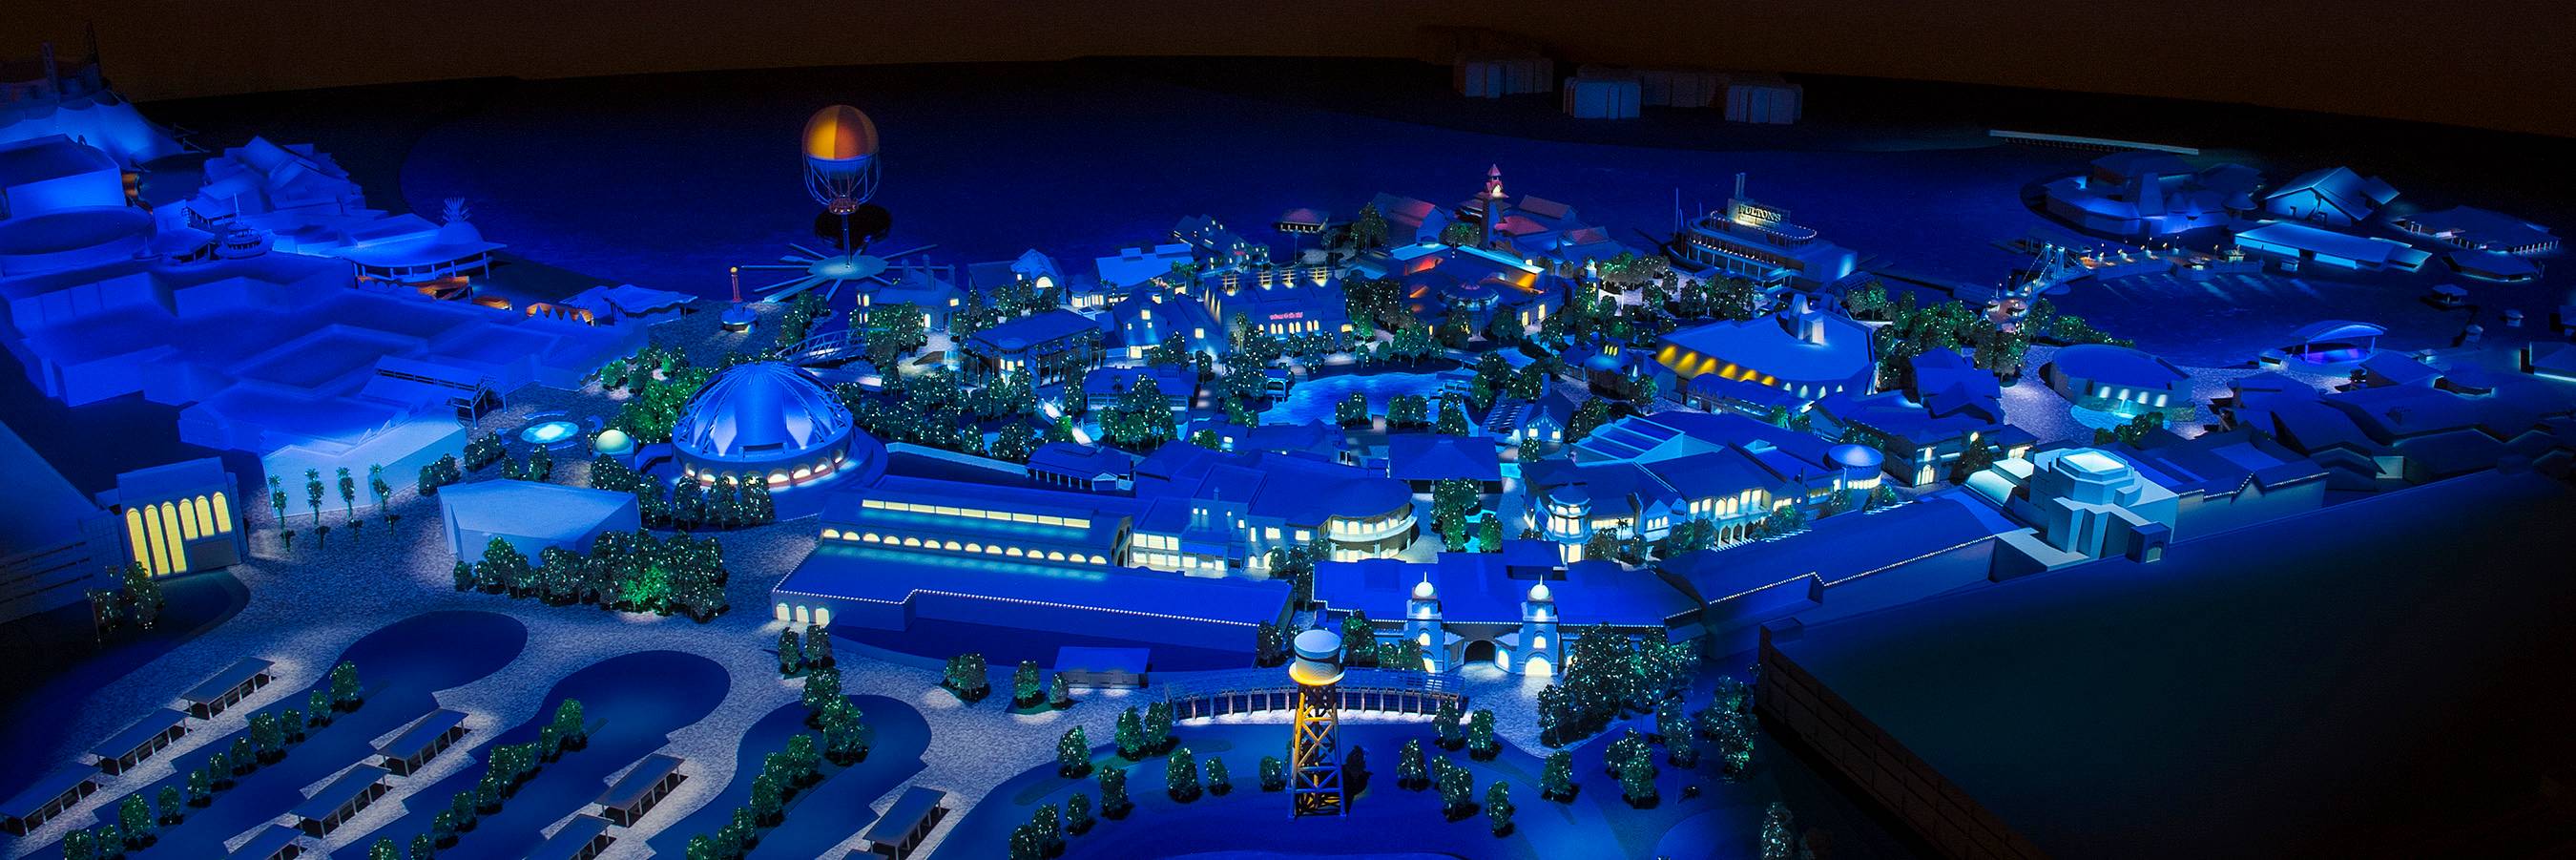 Disney Springs nighttime view concept art